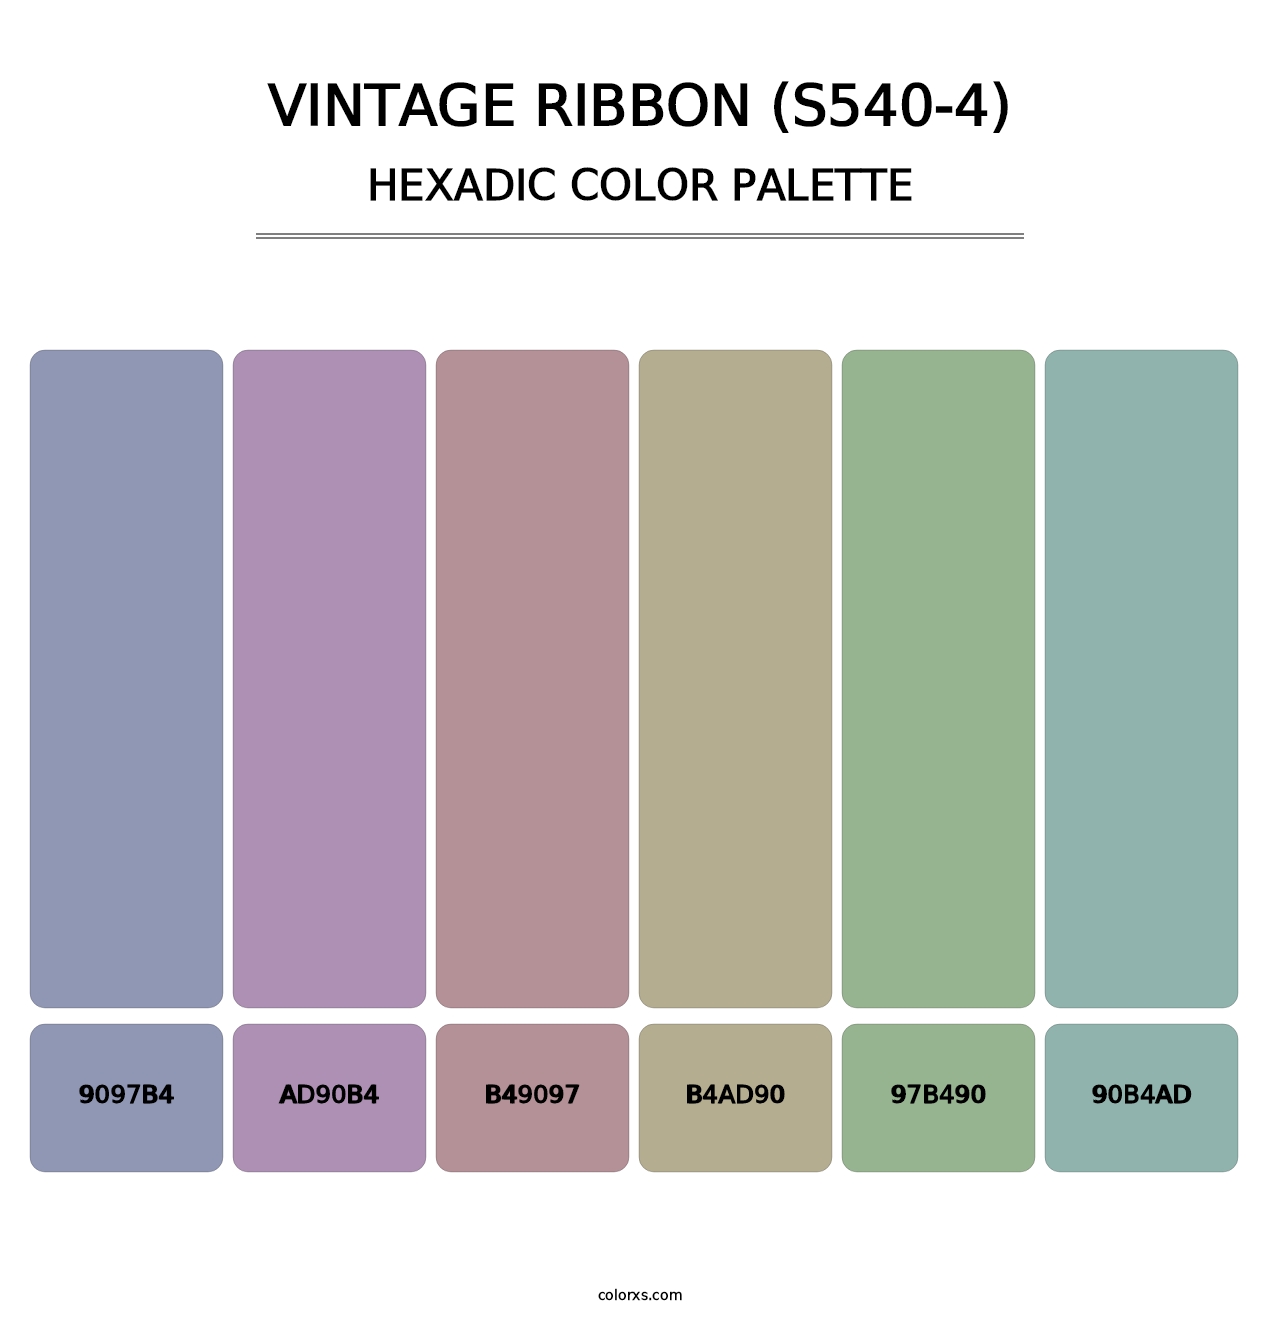 Vintage Ribbon (S540-4) - Hexadic Color Palette